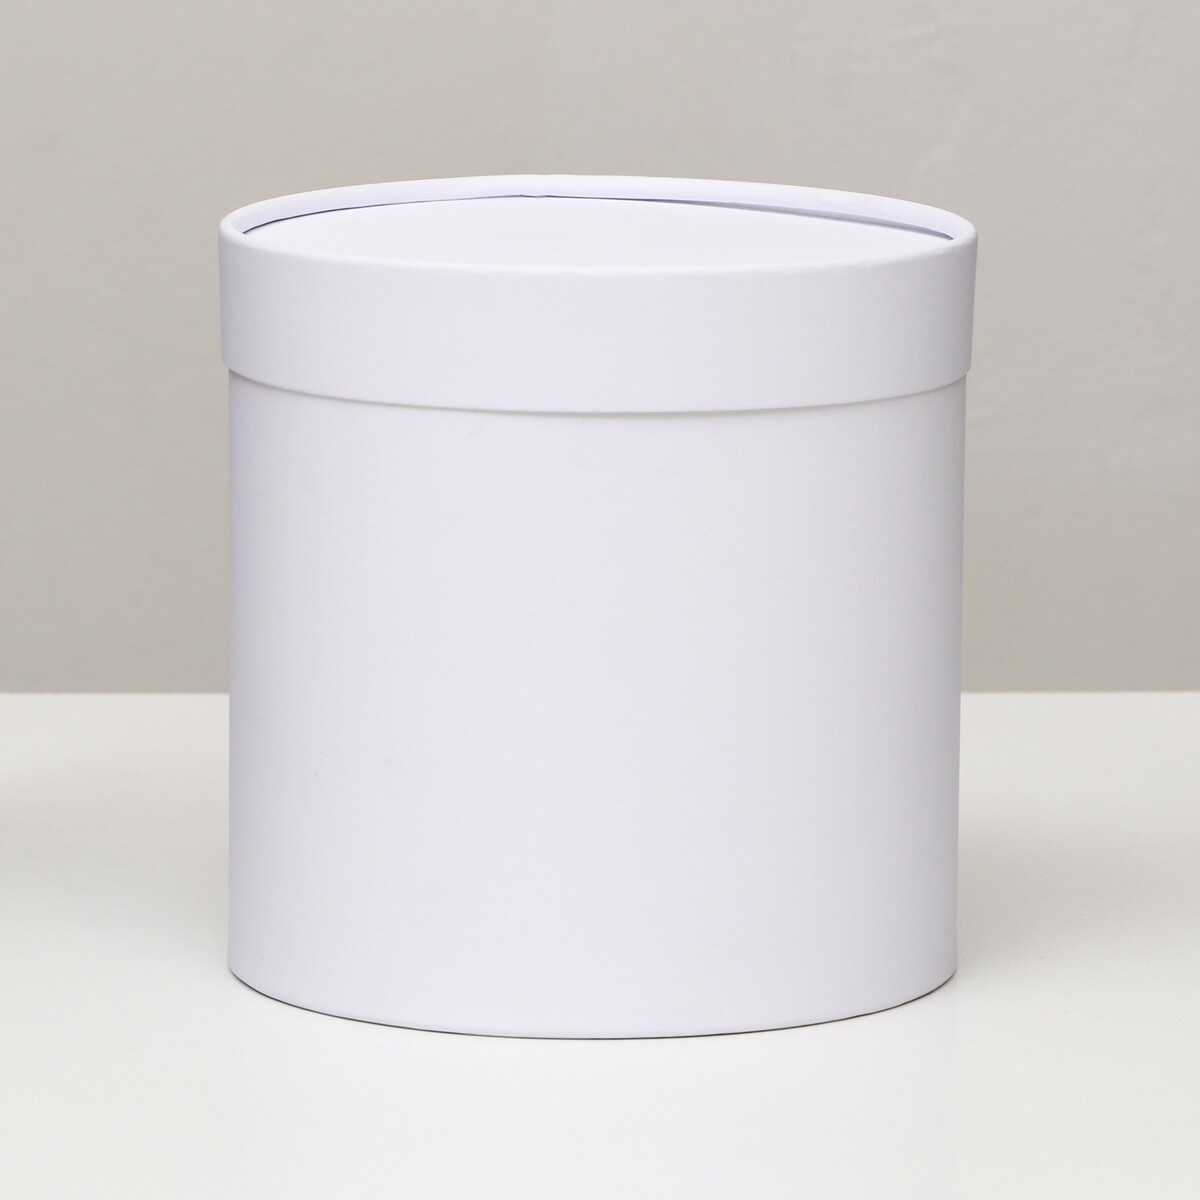 Подарочная коробка white, завальцованная без окна, 18х18 см